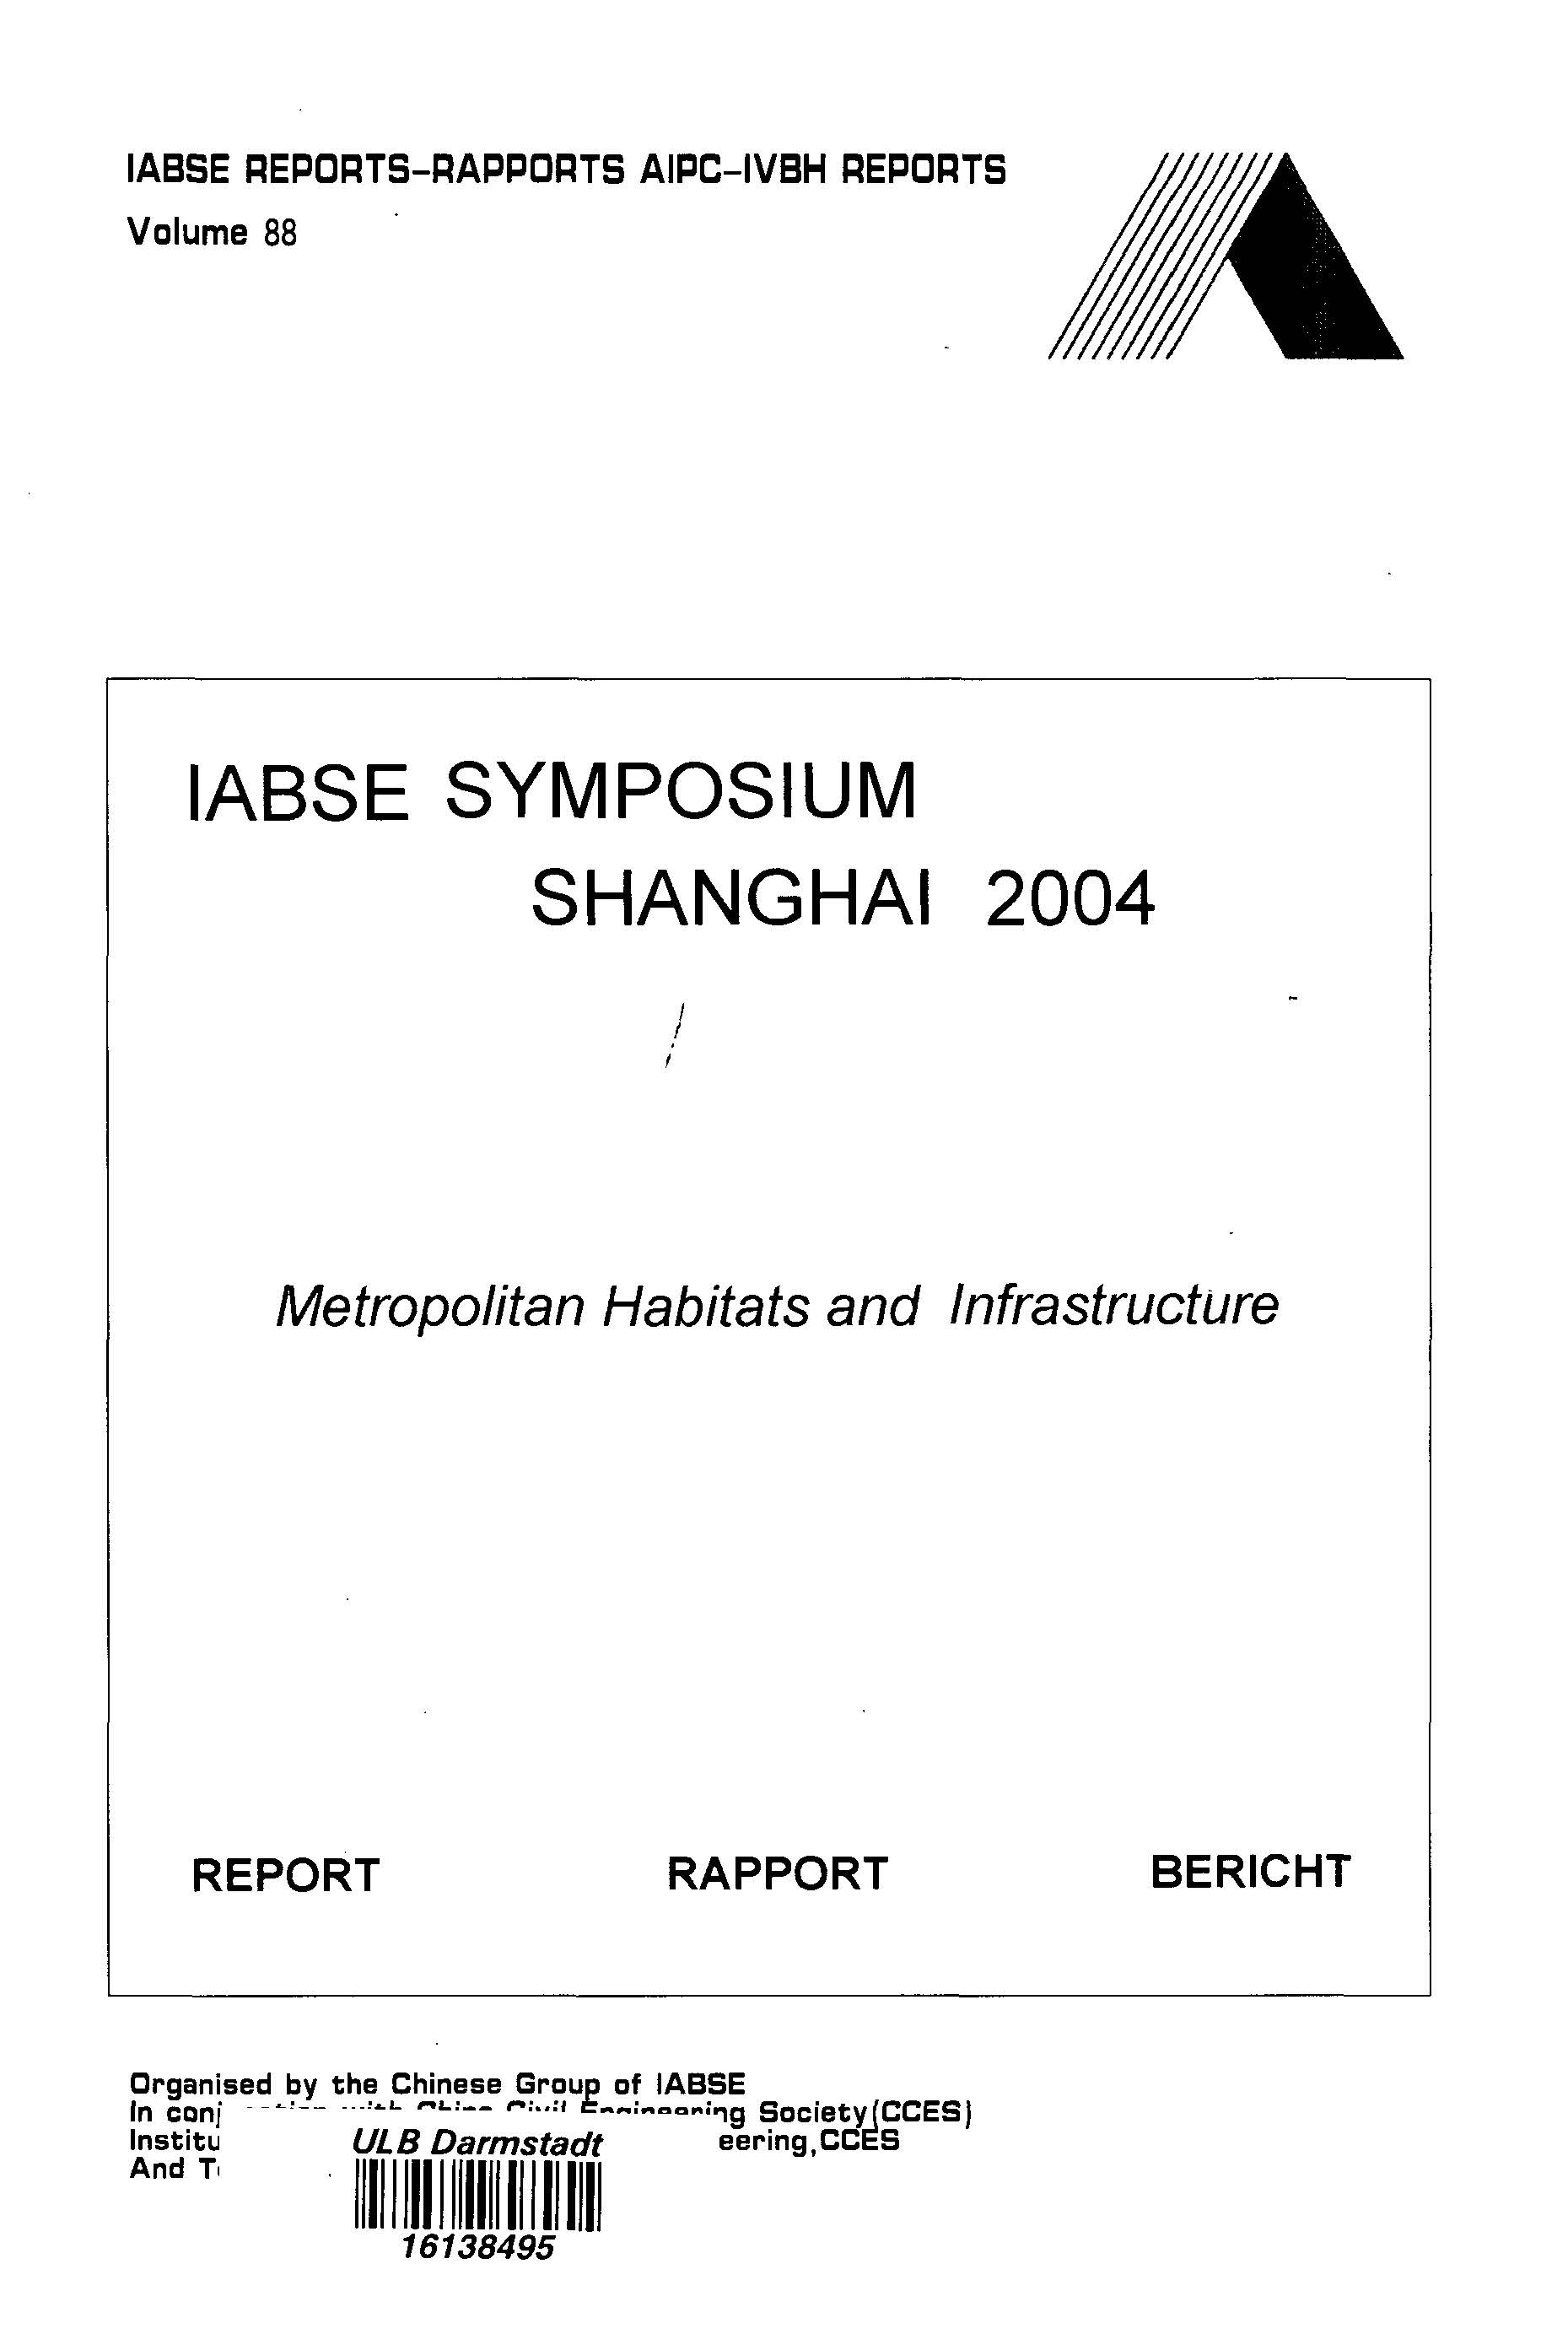  IABSE Symposium Shanghai 2004